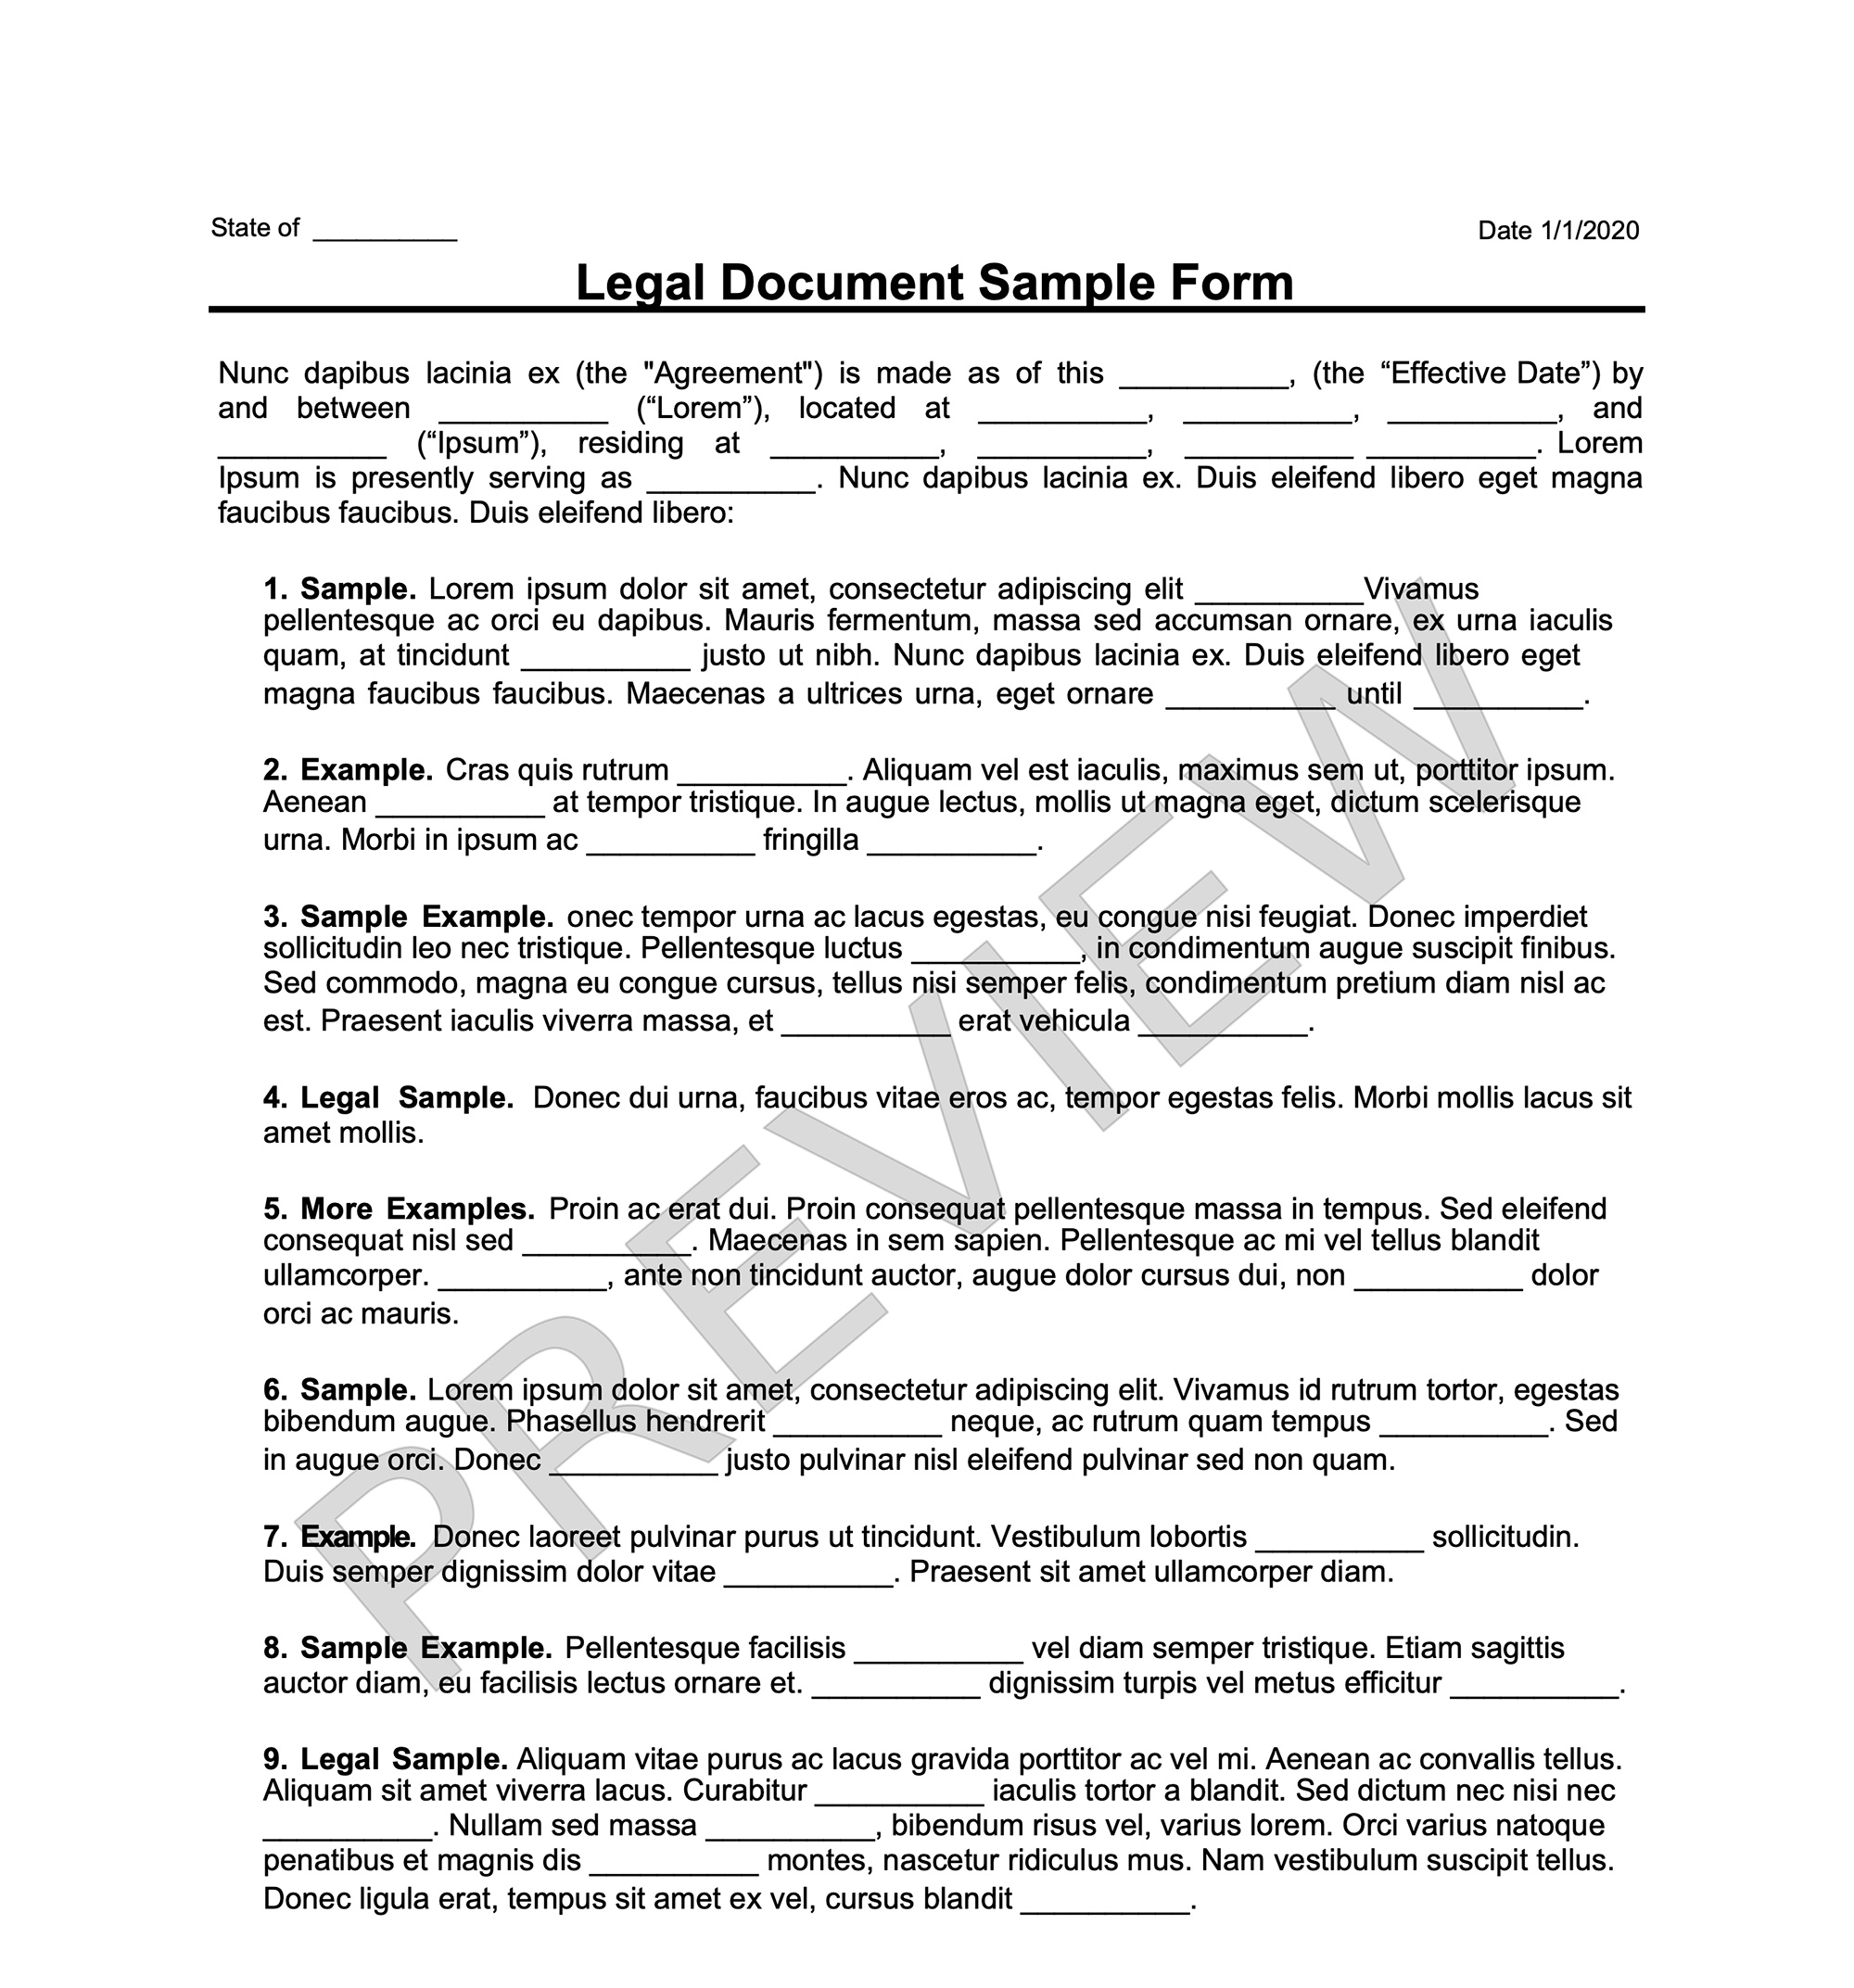 loan agreements templates